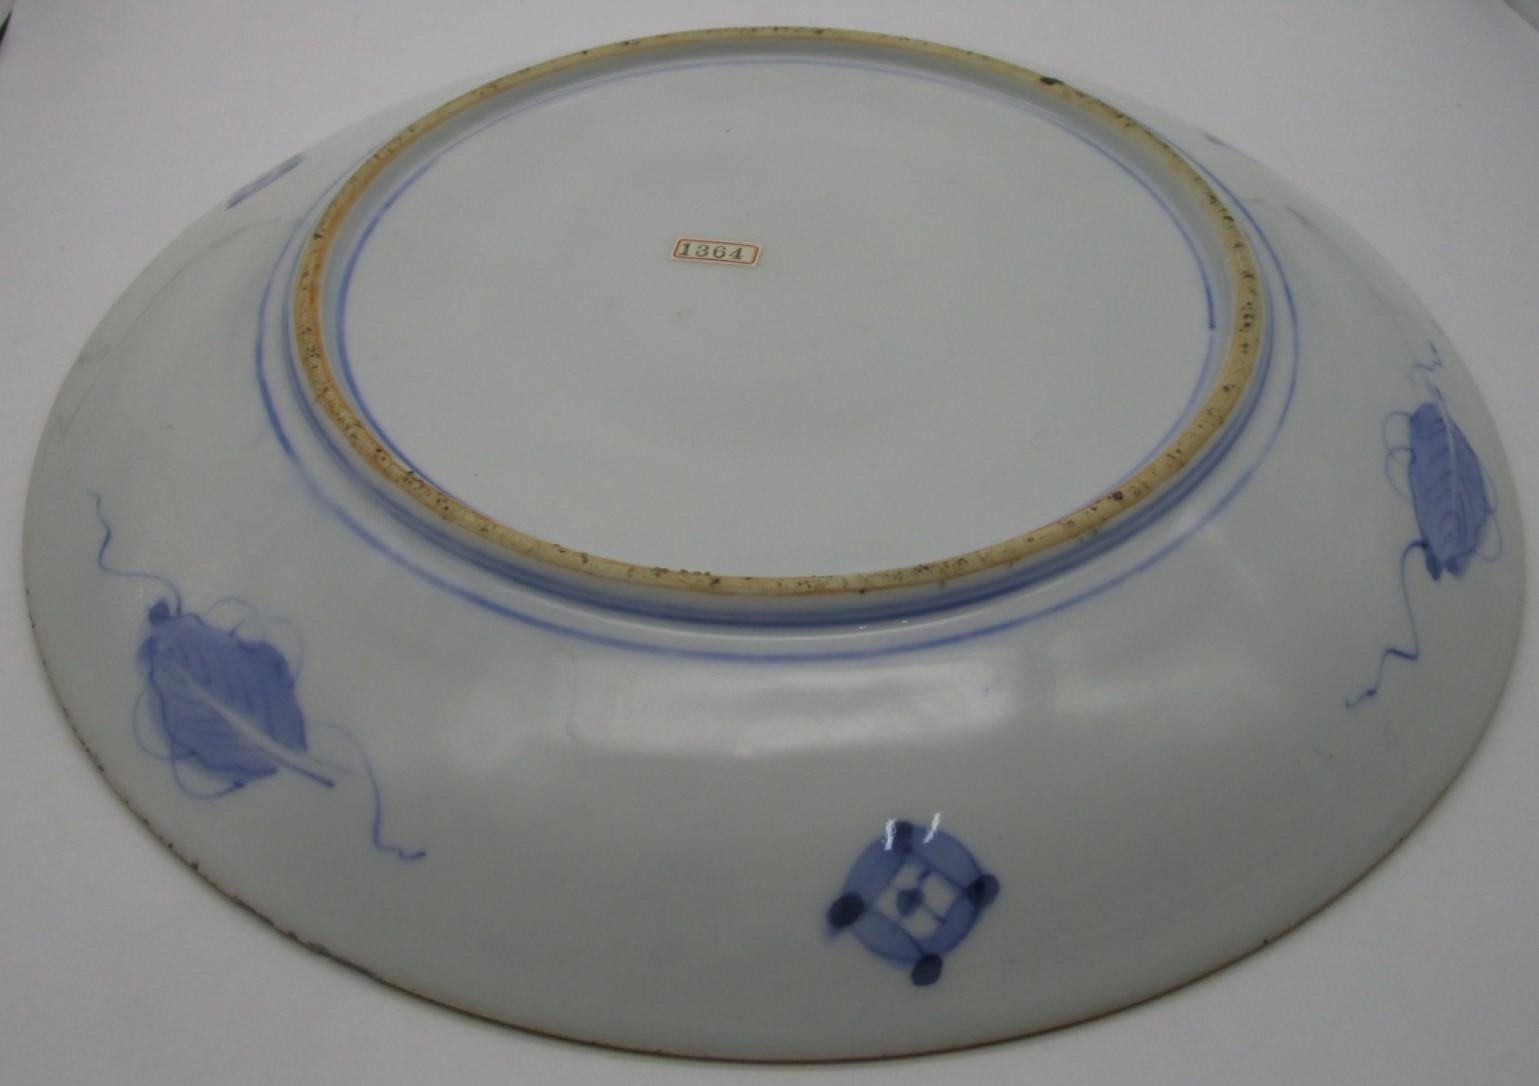 Late 19th Century Japanese Imari Meiji Period Porcelain Charger, circa 1880